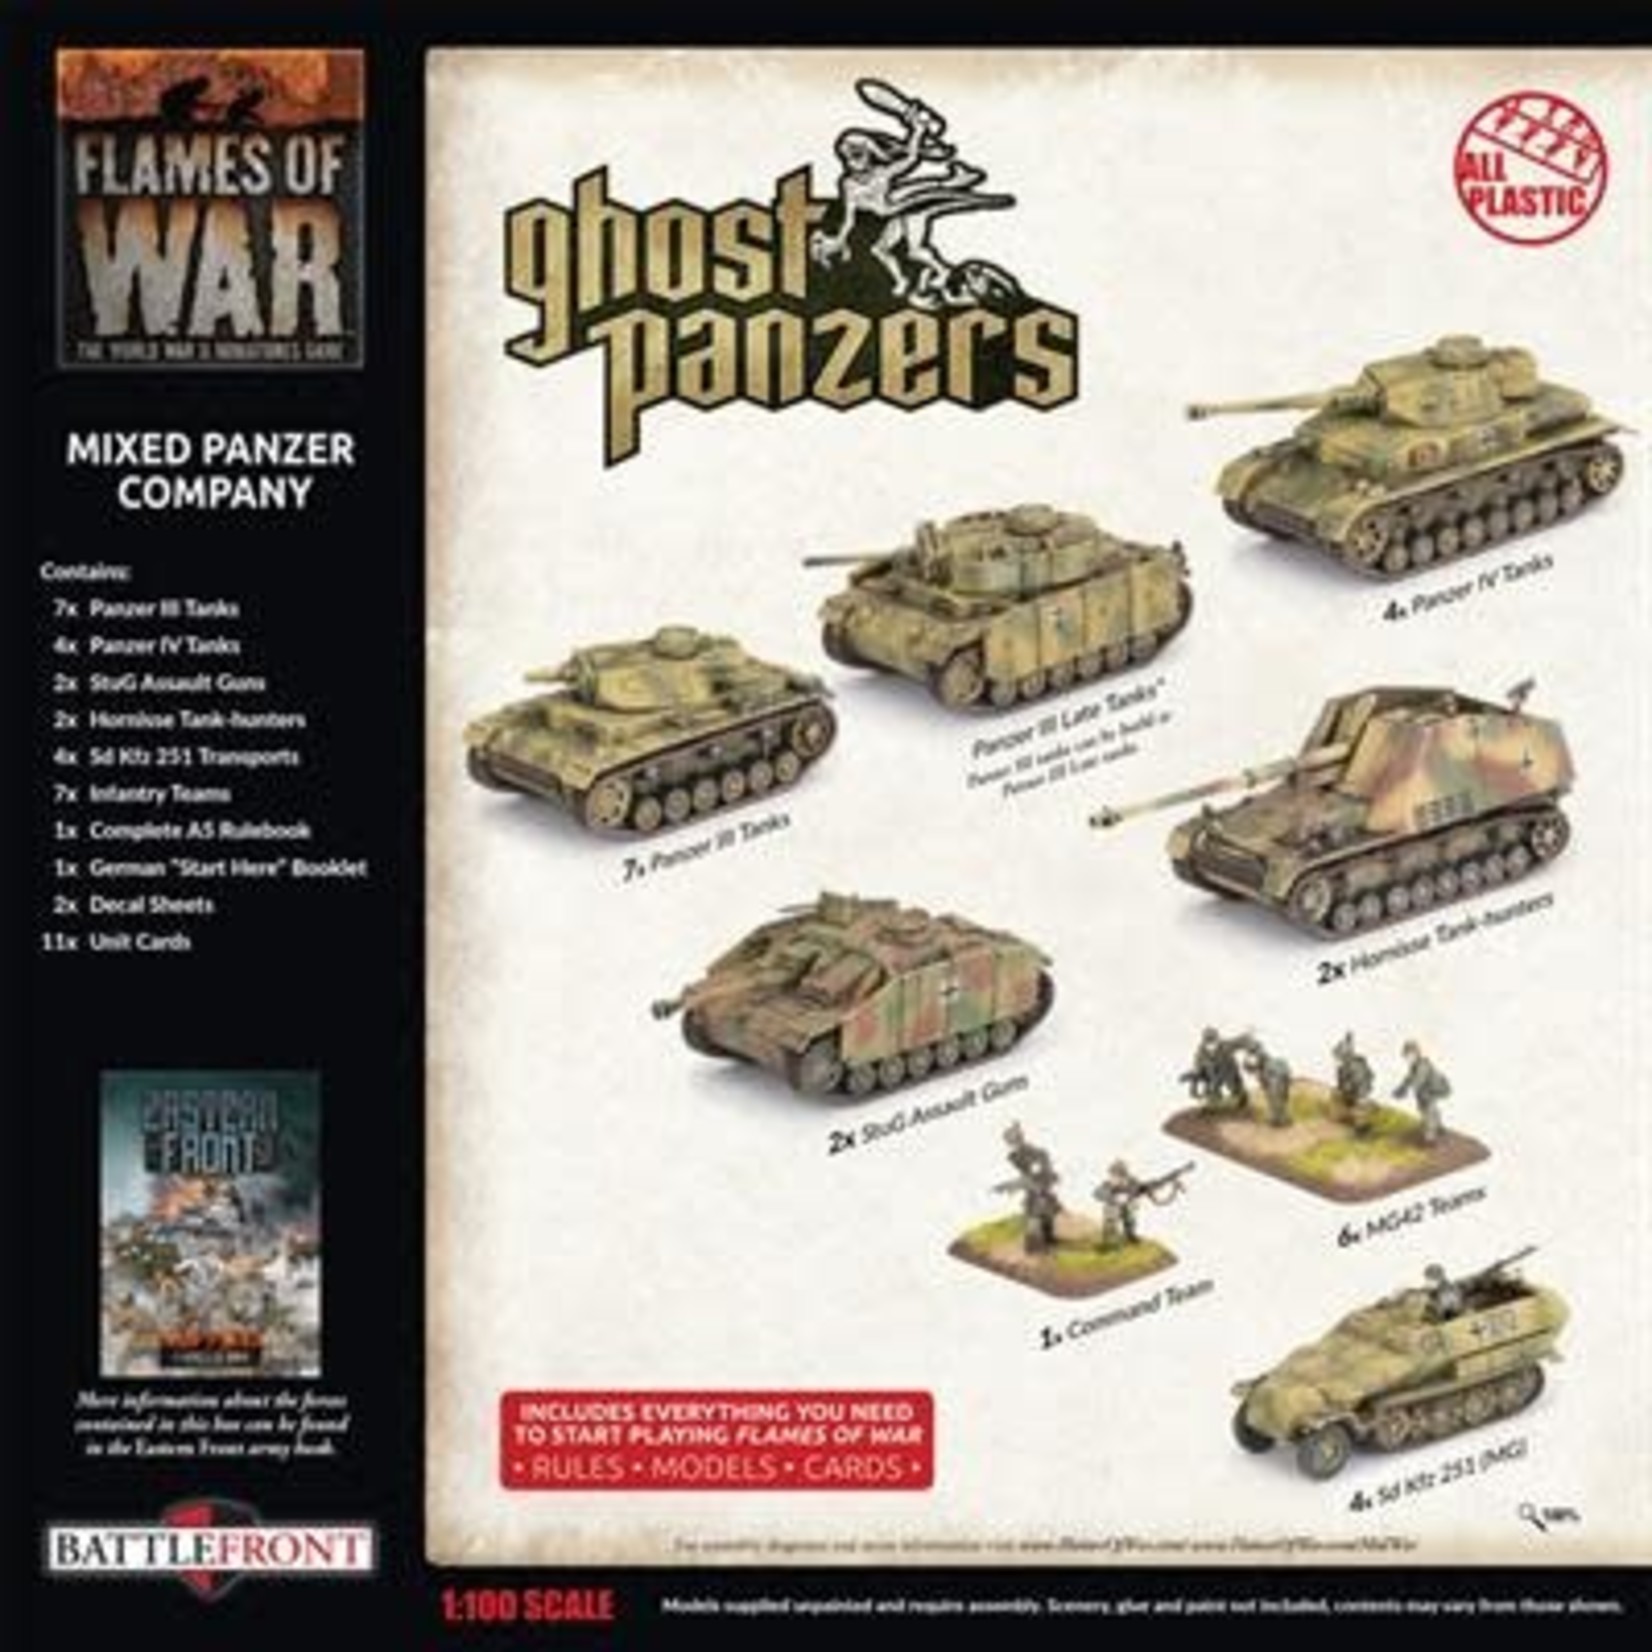 Flames of War Flames of War: German: Ghost Panzers Mixed Panzer Company